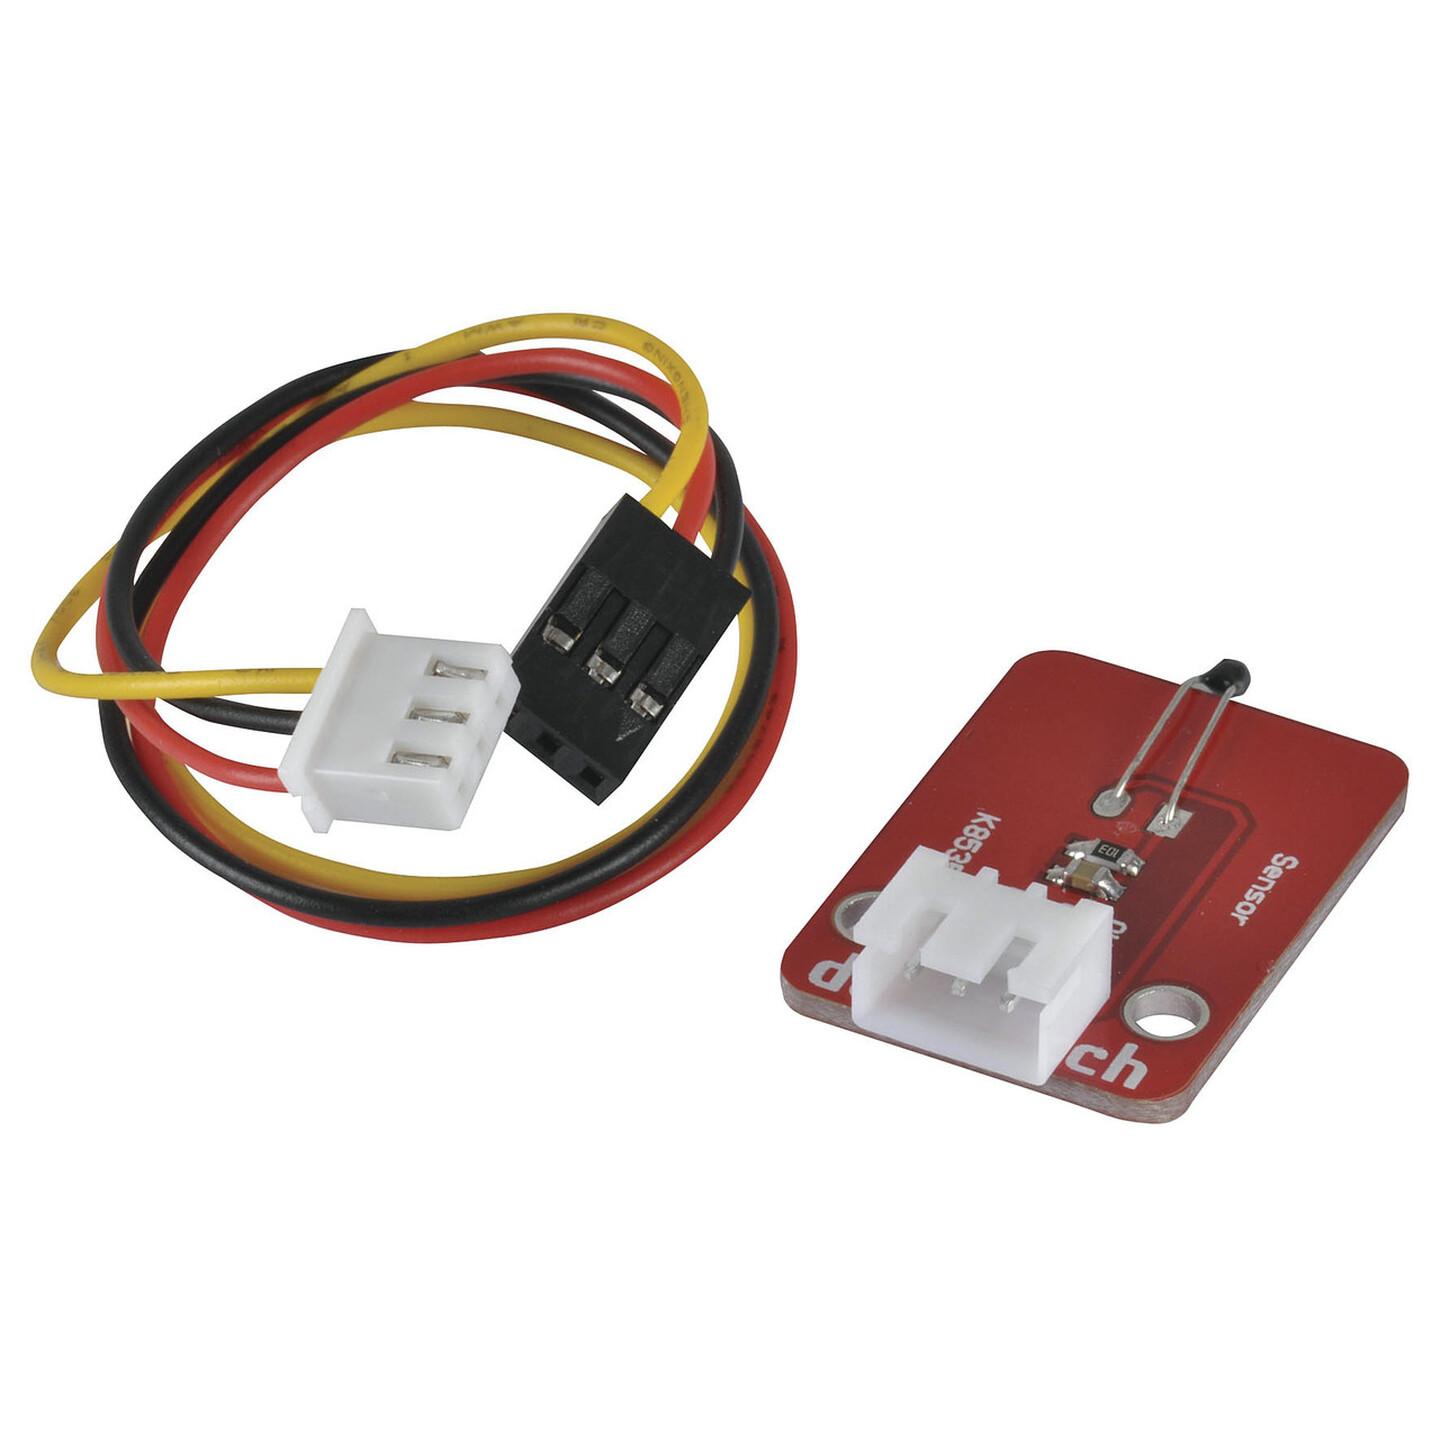 Duinotech Arduino Compatible Temperature Sensor Module